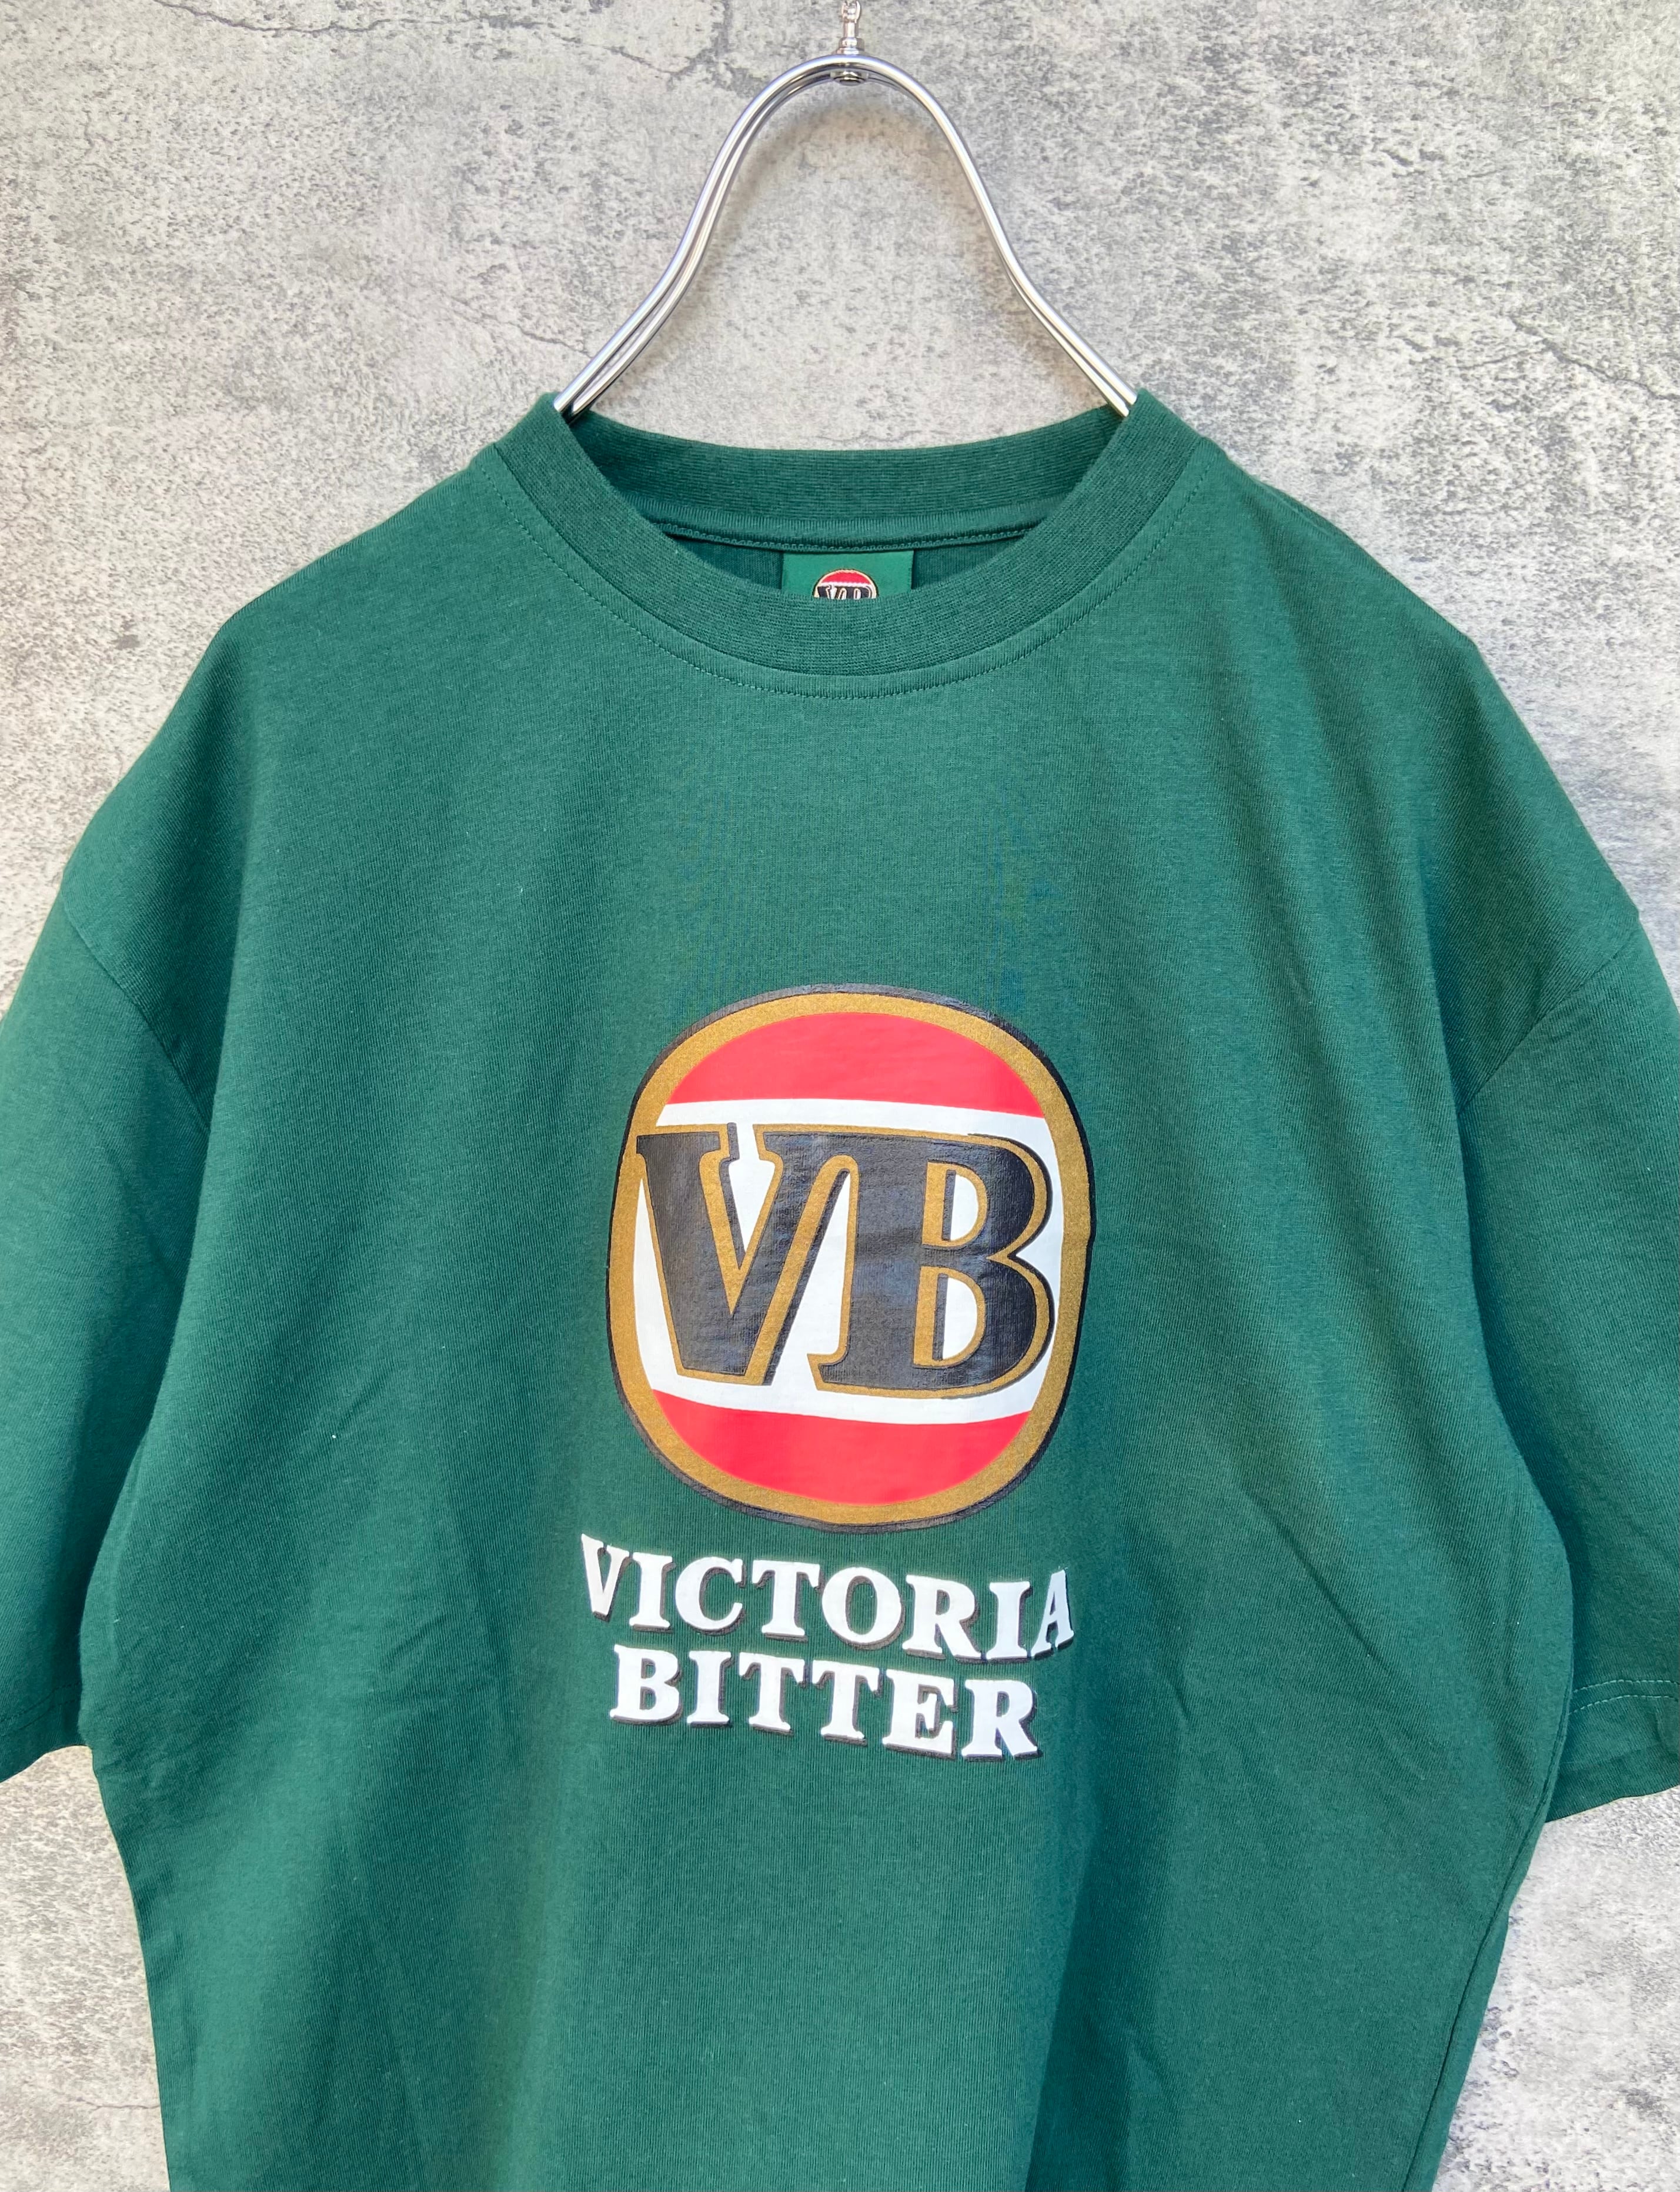 VICTORIA BNITTER /ビクトリアビター  企業Tシャツ ワンポイント 緑 グリーン